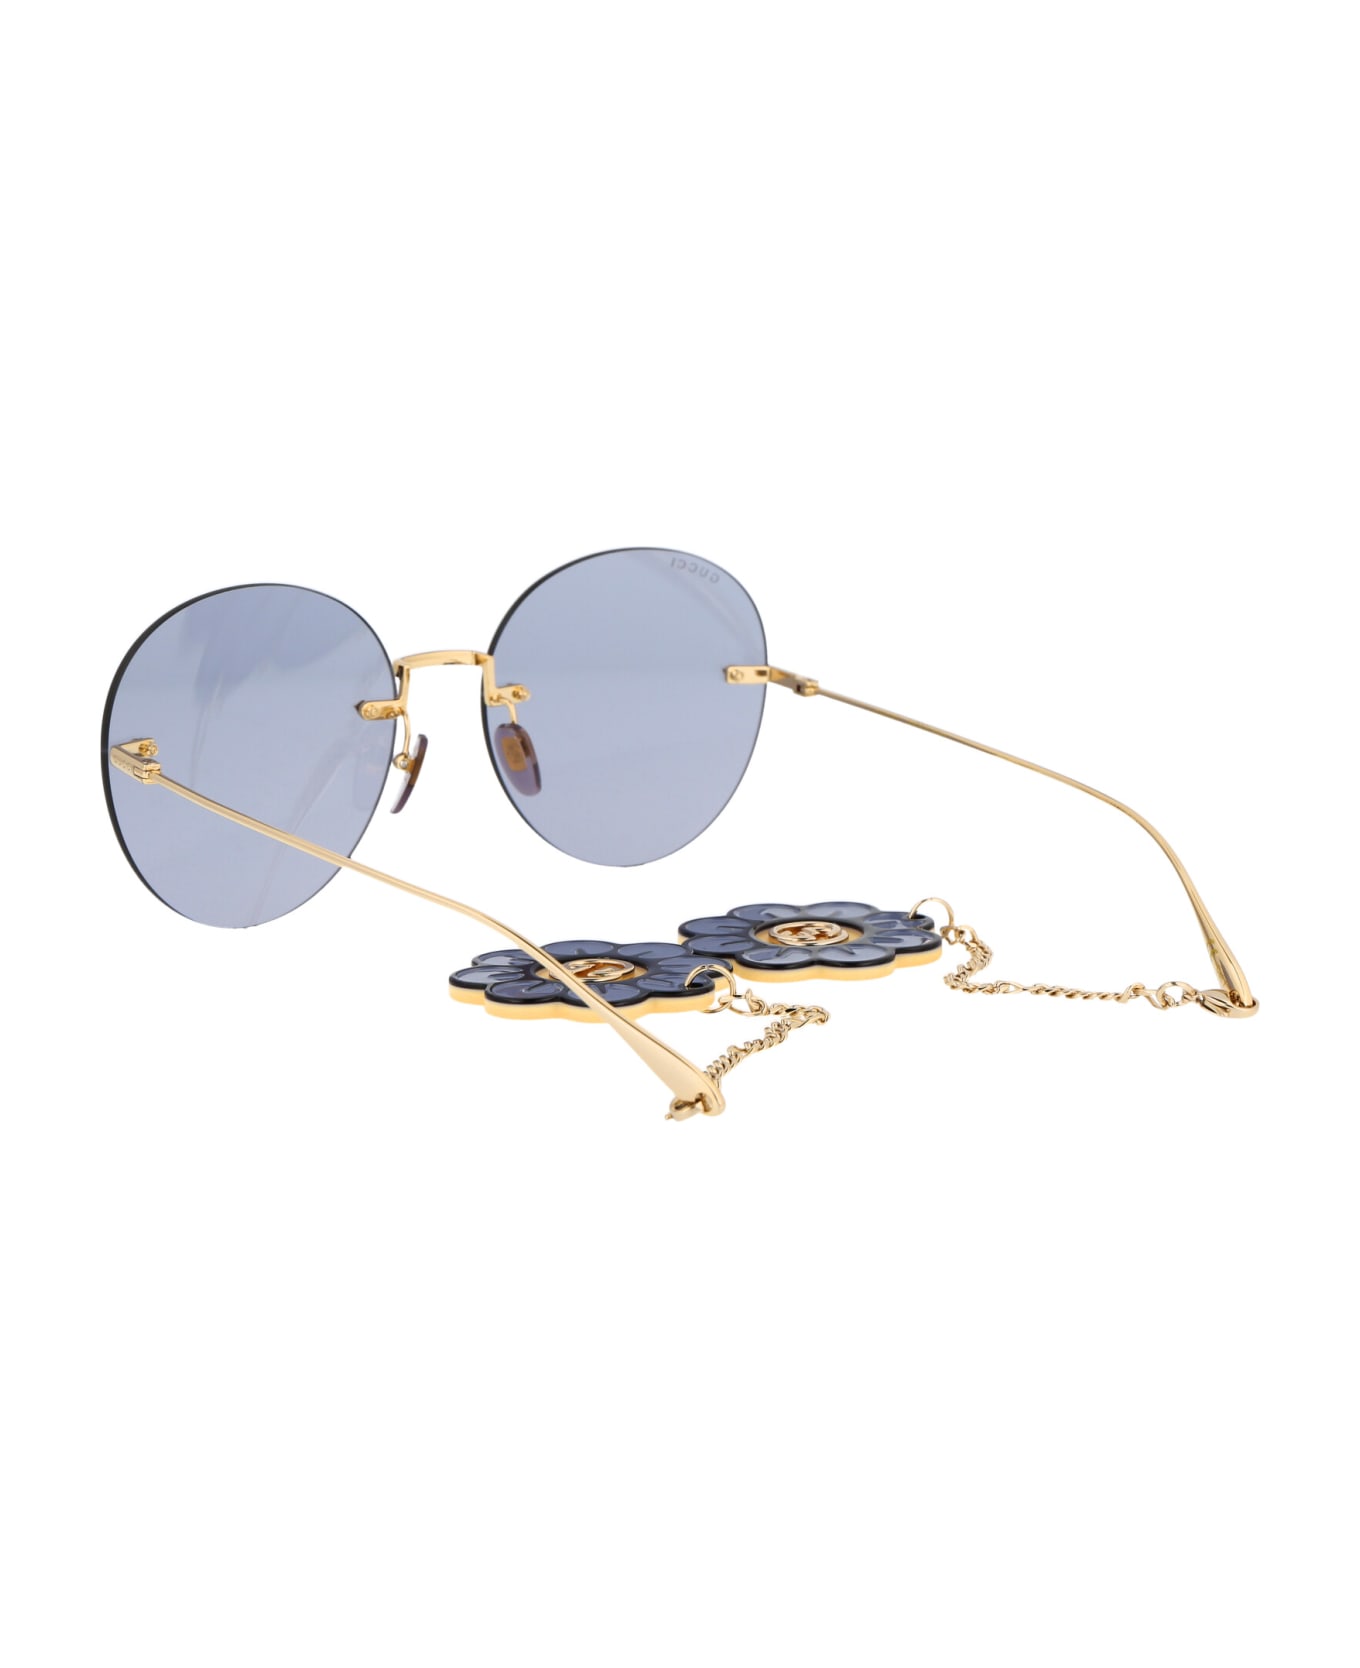 Gucci Eyewear Gg1149s Sunglasses - 006 GOLD GOLD VIOLET